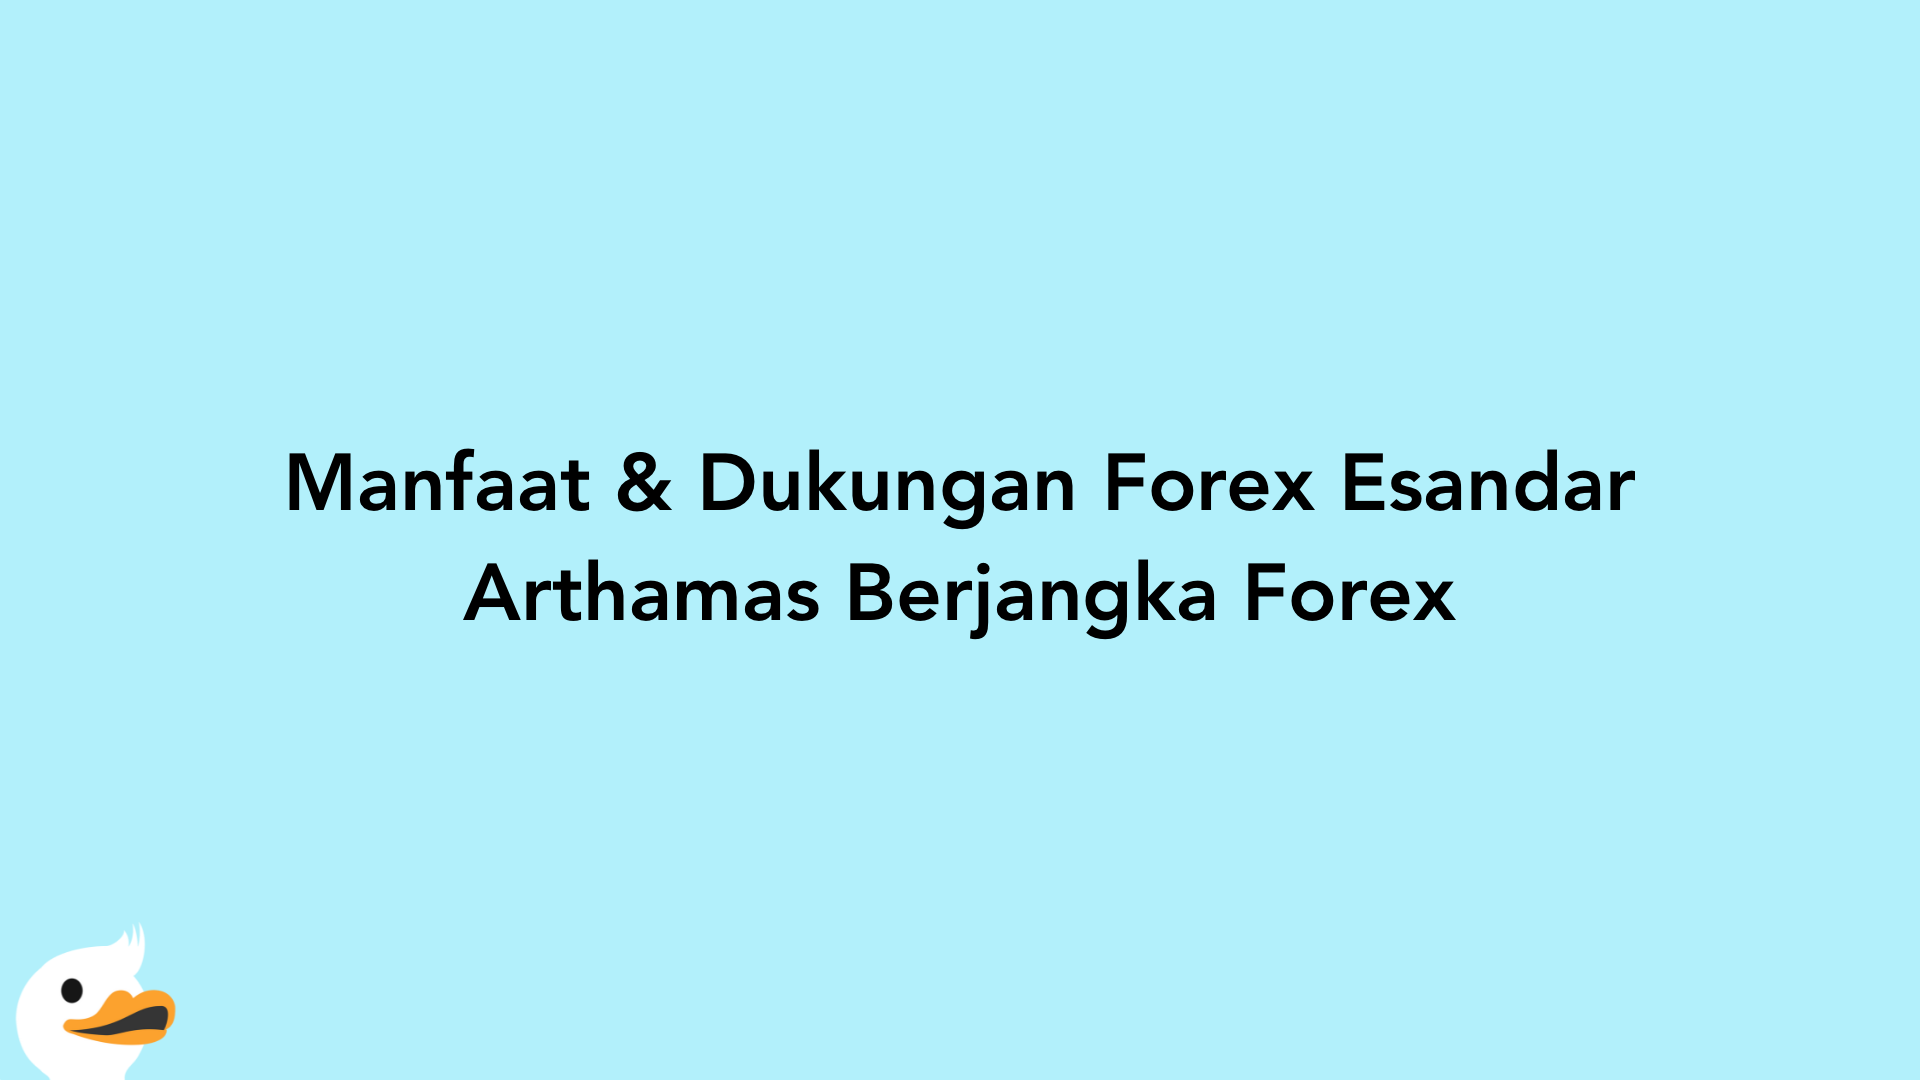 Manfaat & Dukungan Forex Esandar Arthamas Berjangka Forex